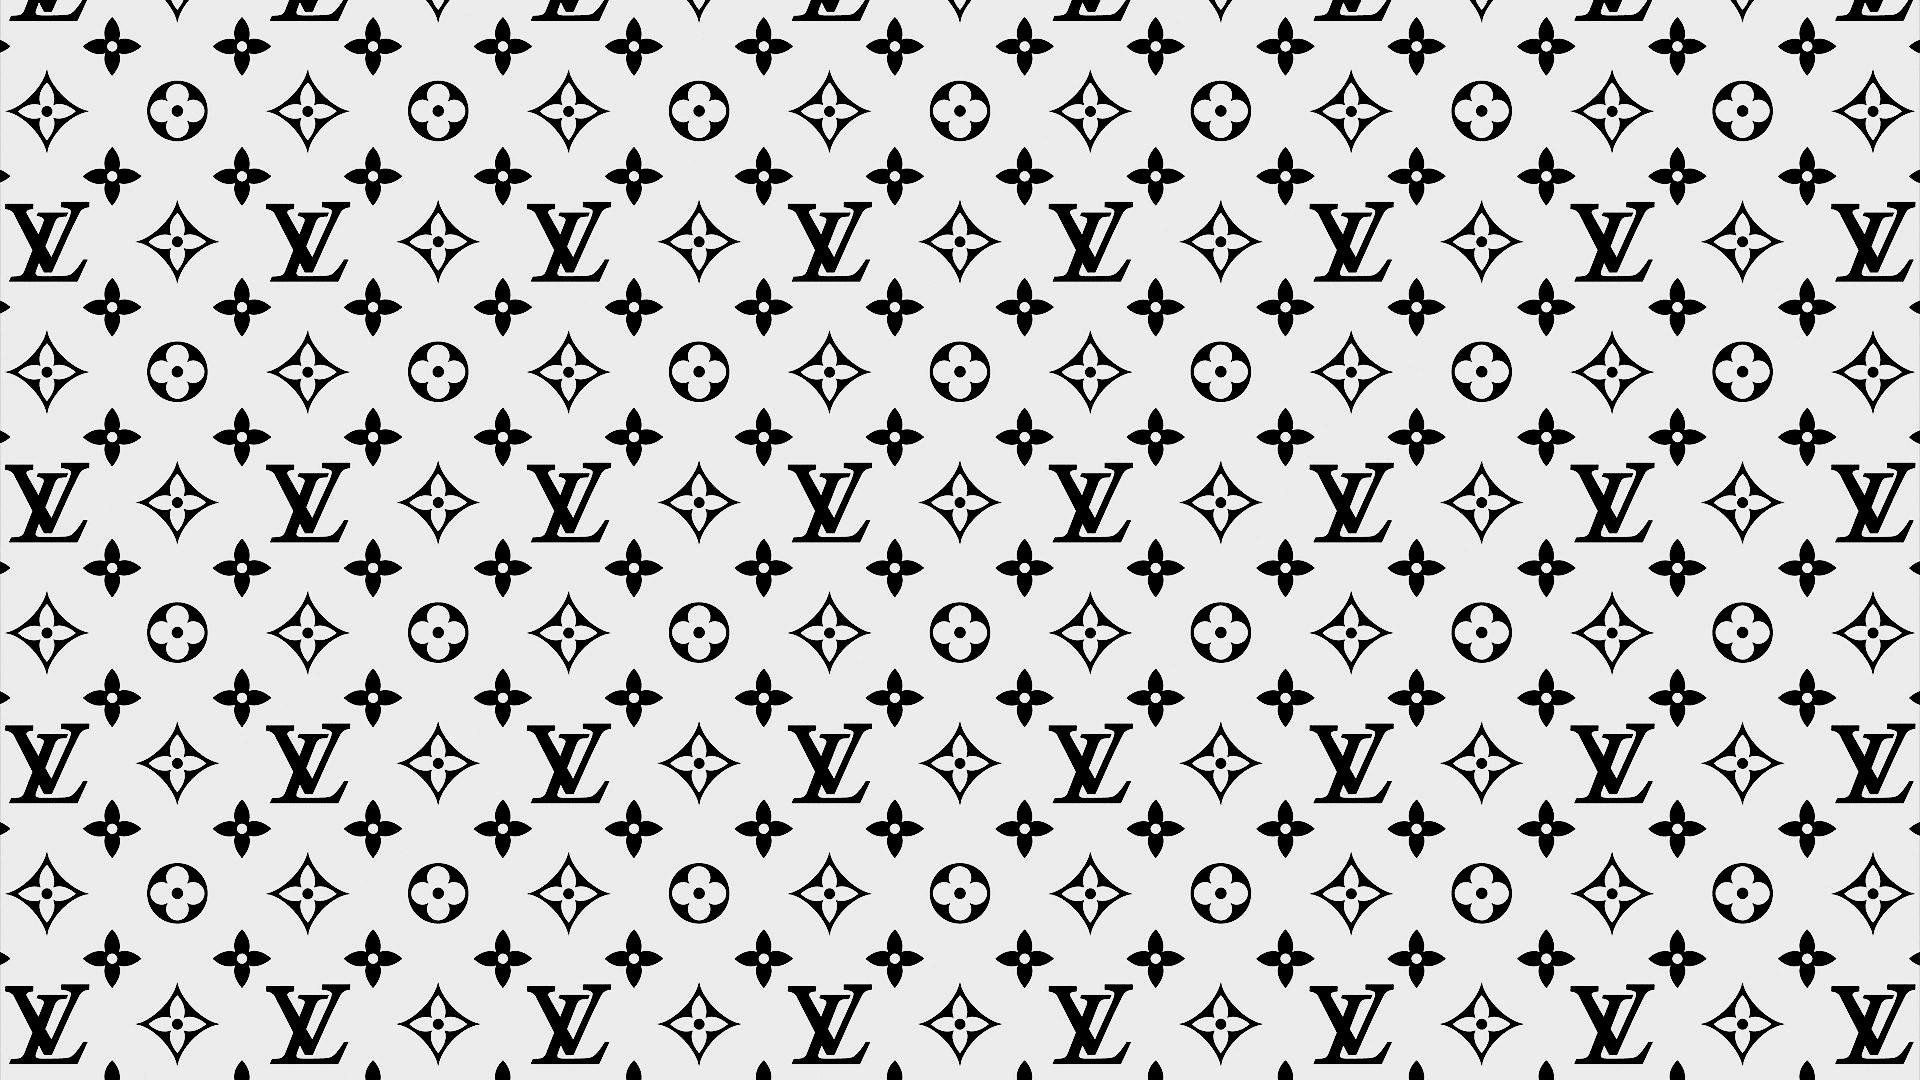 LOUIS VUITTON wallpaper ❇⭐  Louis vuitton iphone wallpaper, Monogram  wallpaper, Iphone wallpaper